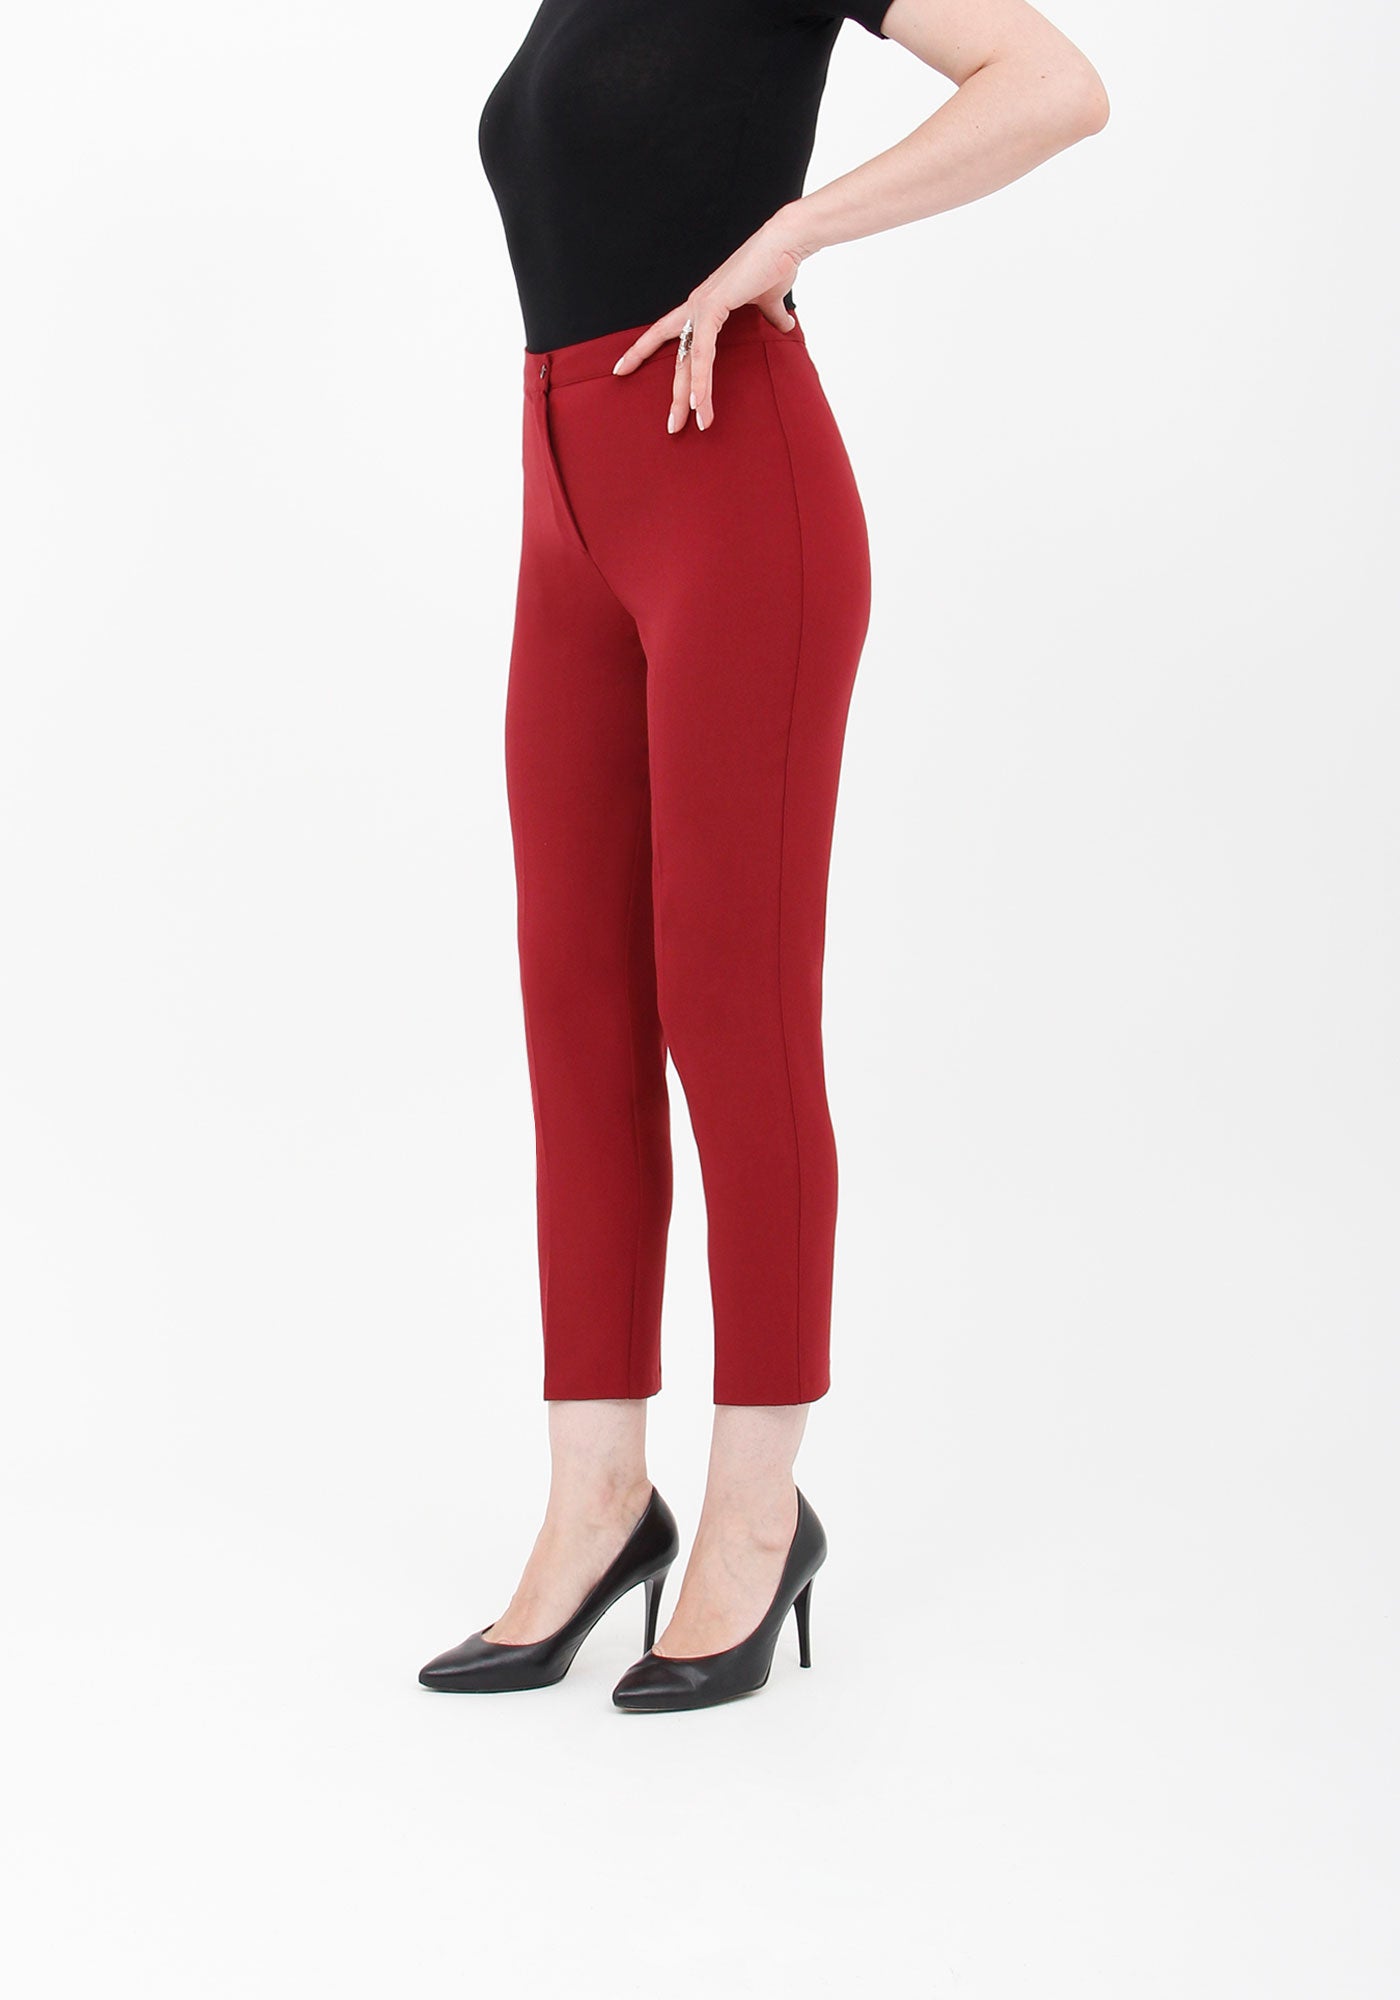 G-Line Women's Burgundy High Waist Slim Fit Stretchy Skinny Work Pants